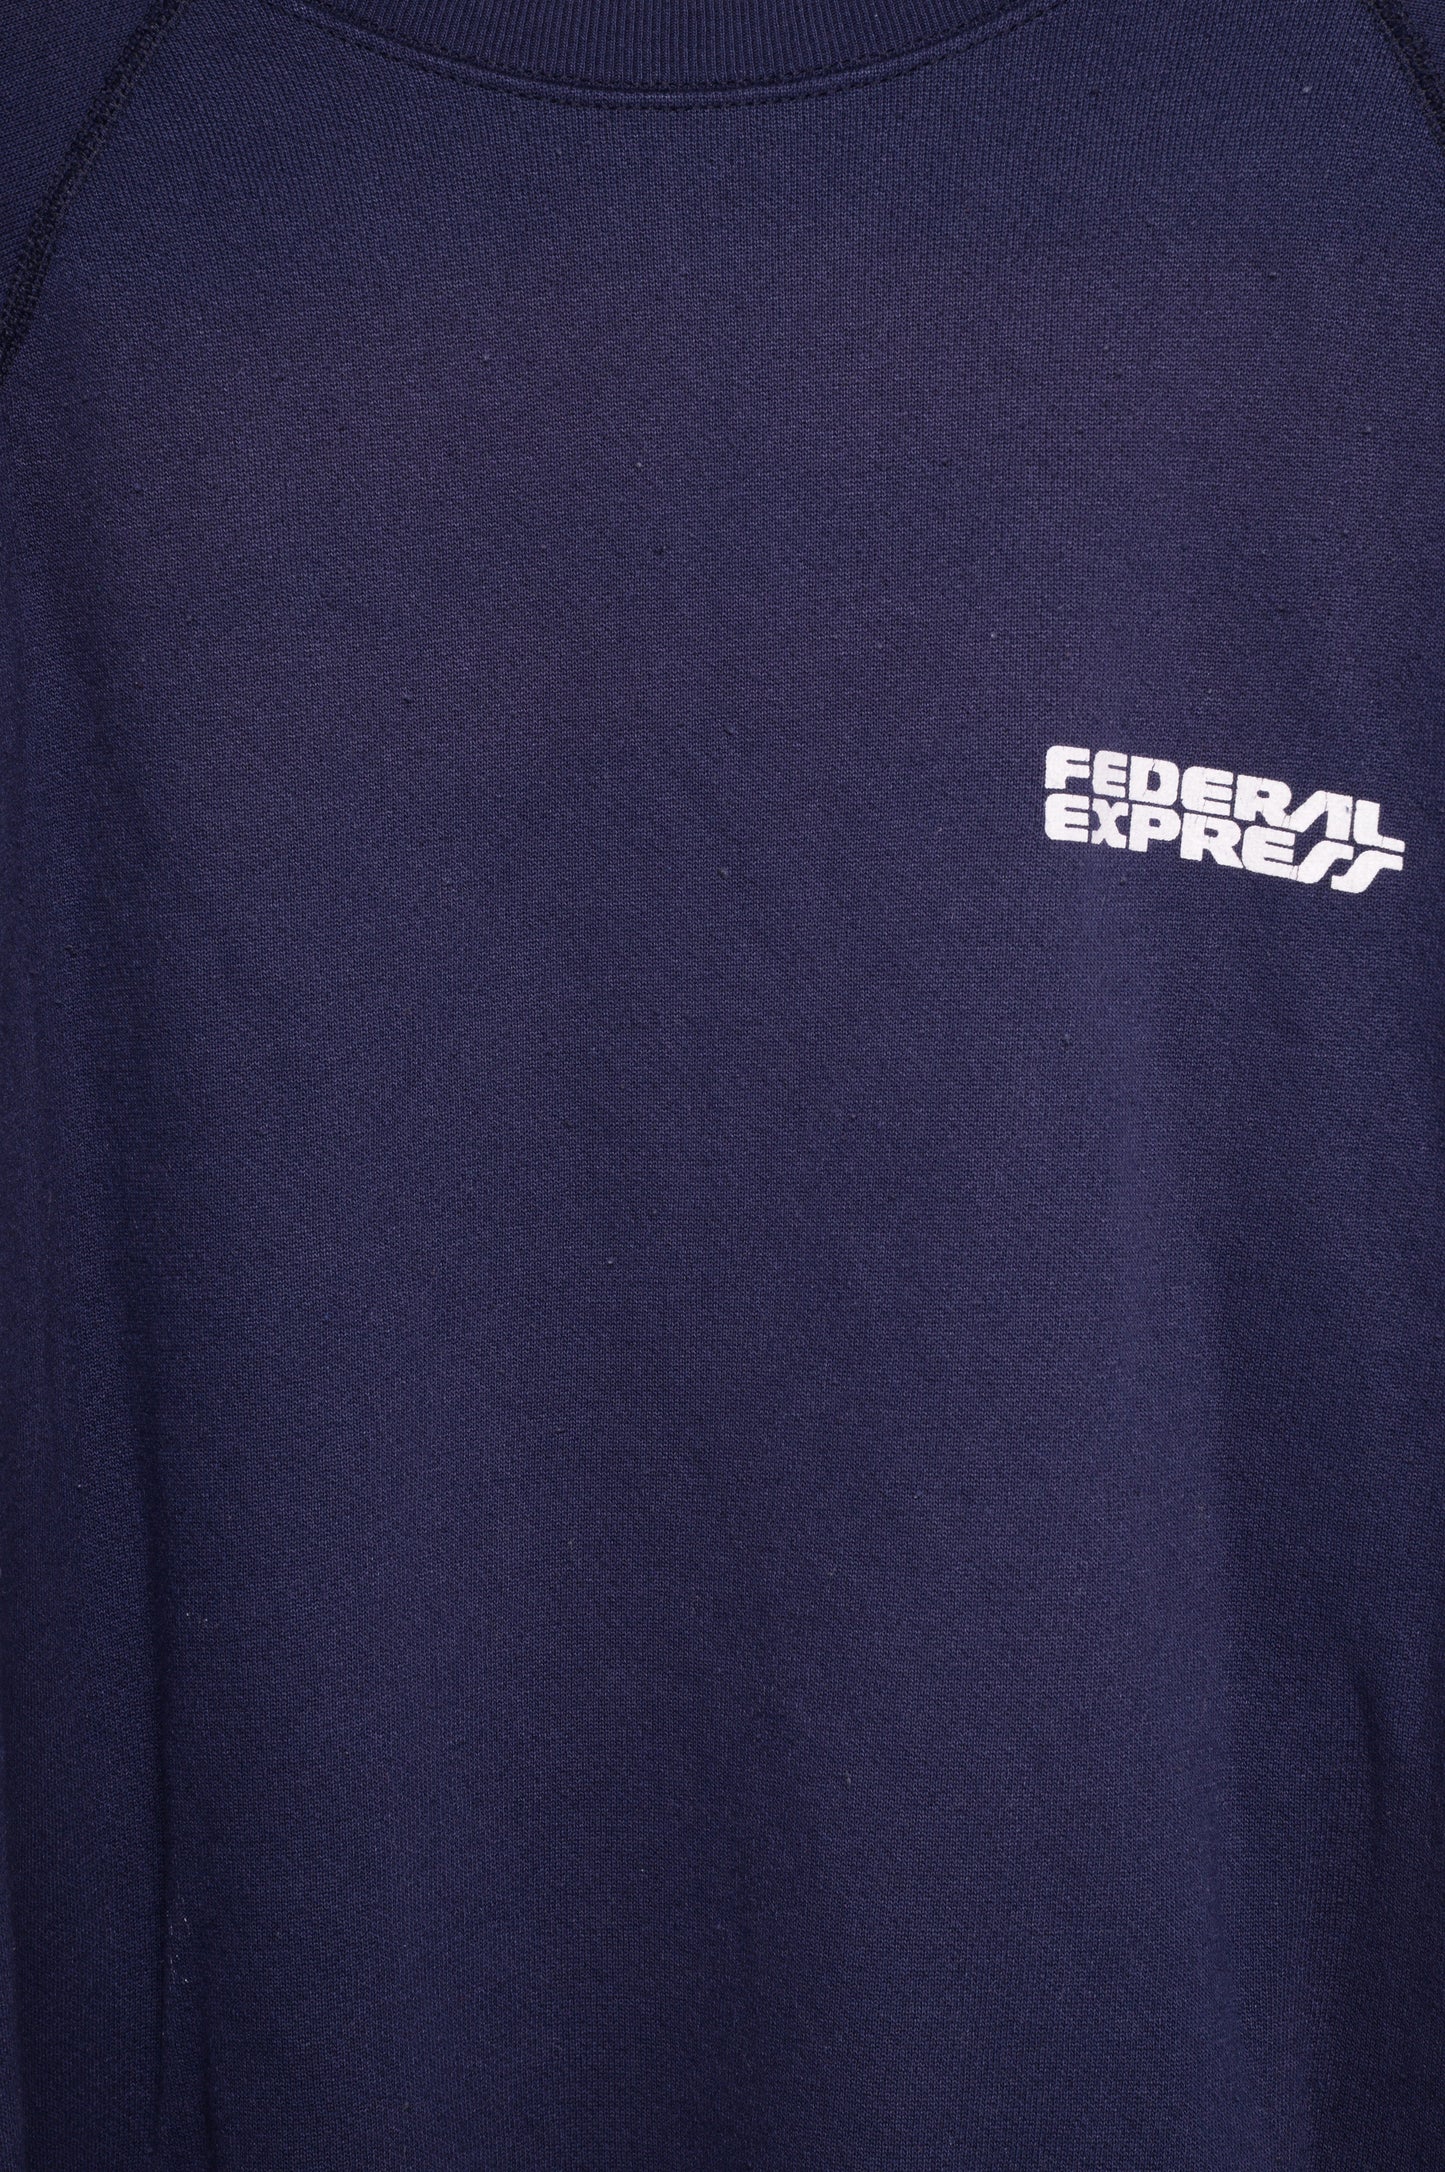 Federal Express Sweatshirt USA